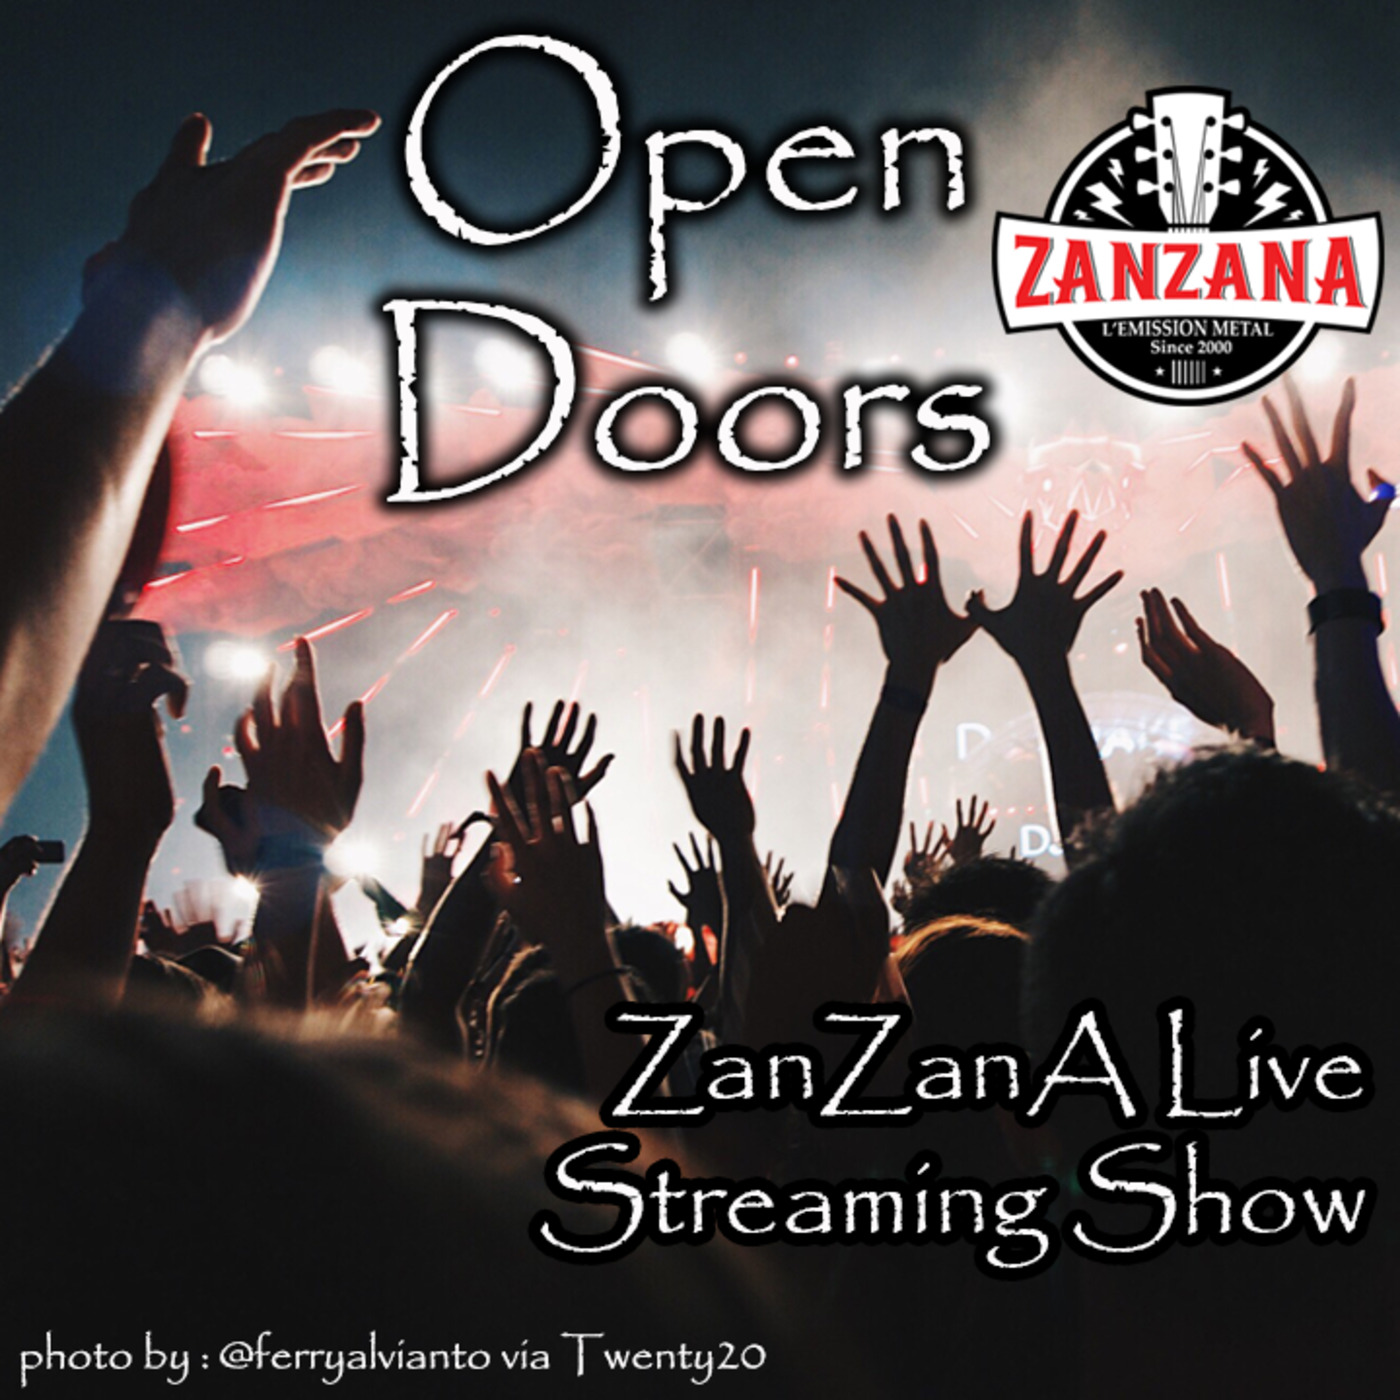 Open Doors - ZanZanA Live Streaming Show - dimanche 25 janvier 2021